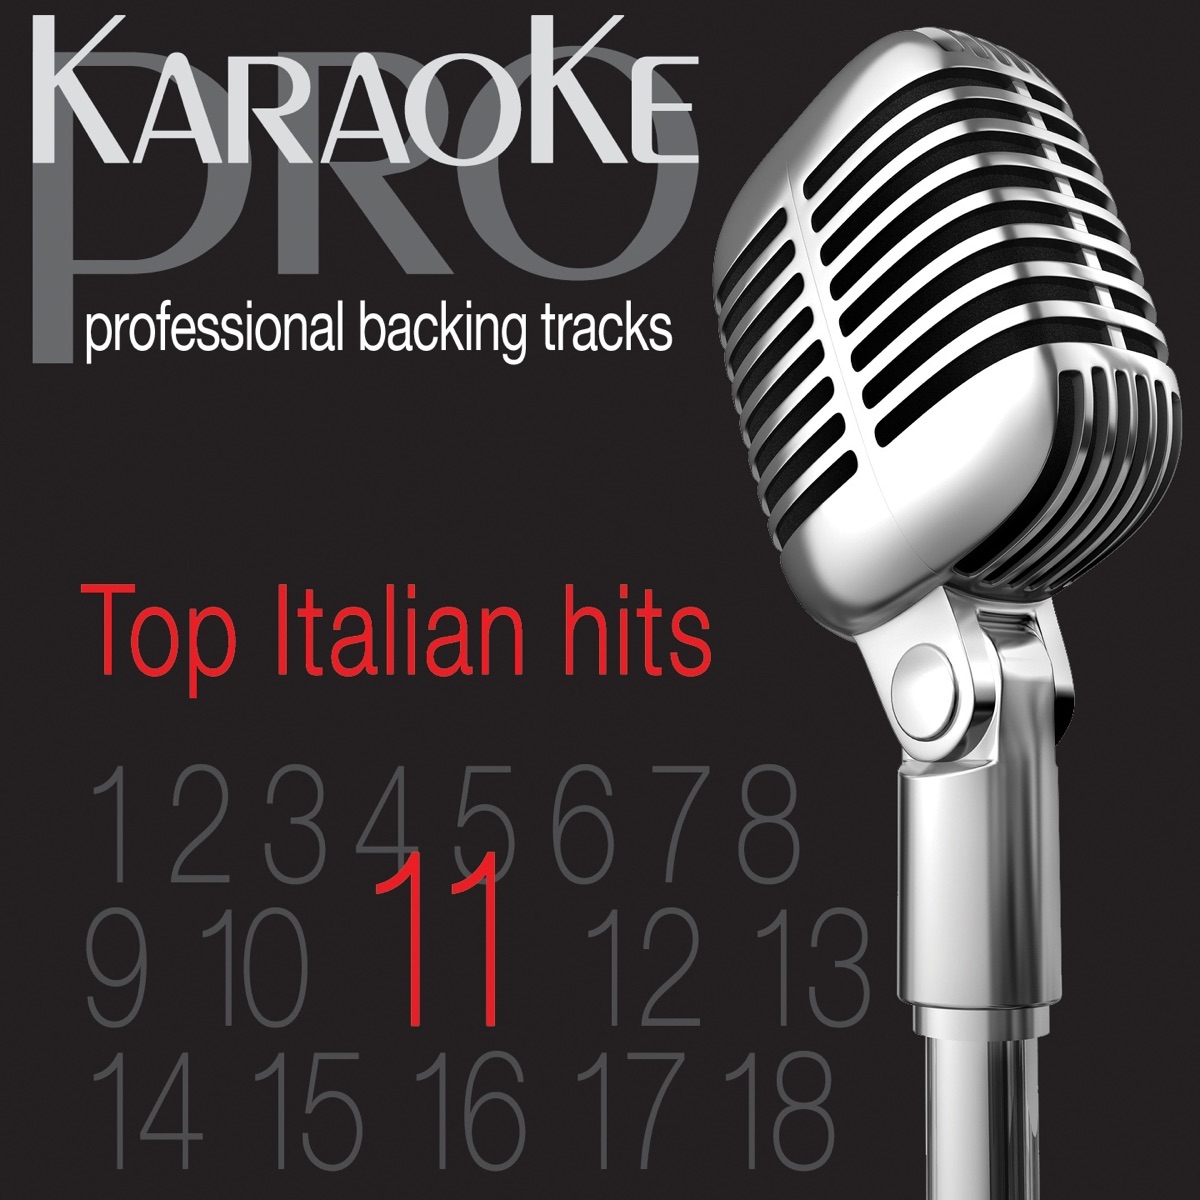 Top Italian Karaoke Hits, Vol. 5 - Album by Karaoke Pro Band - Apple Music